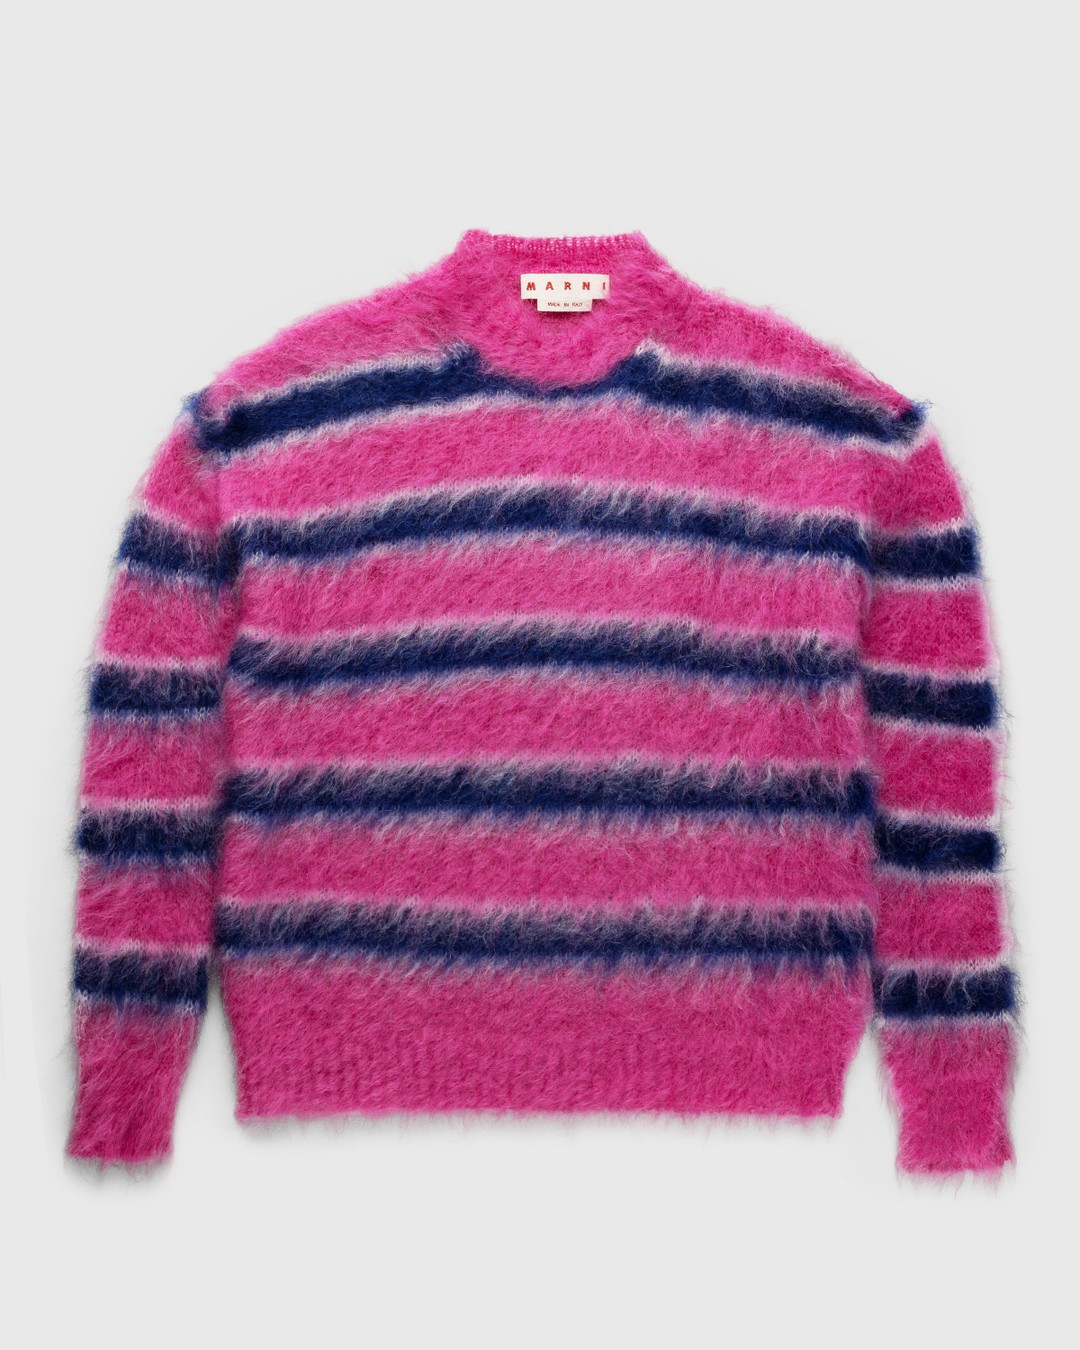 Marni – Striped Mohair Sweater Multi - Crewnecks - Multi - Image 1